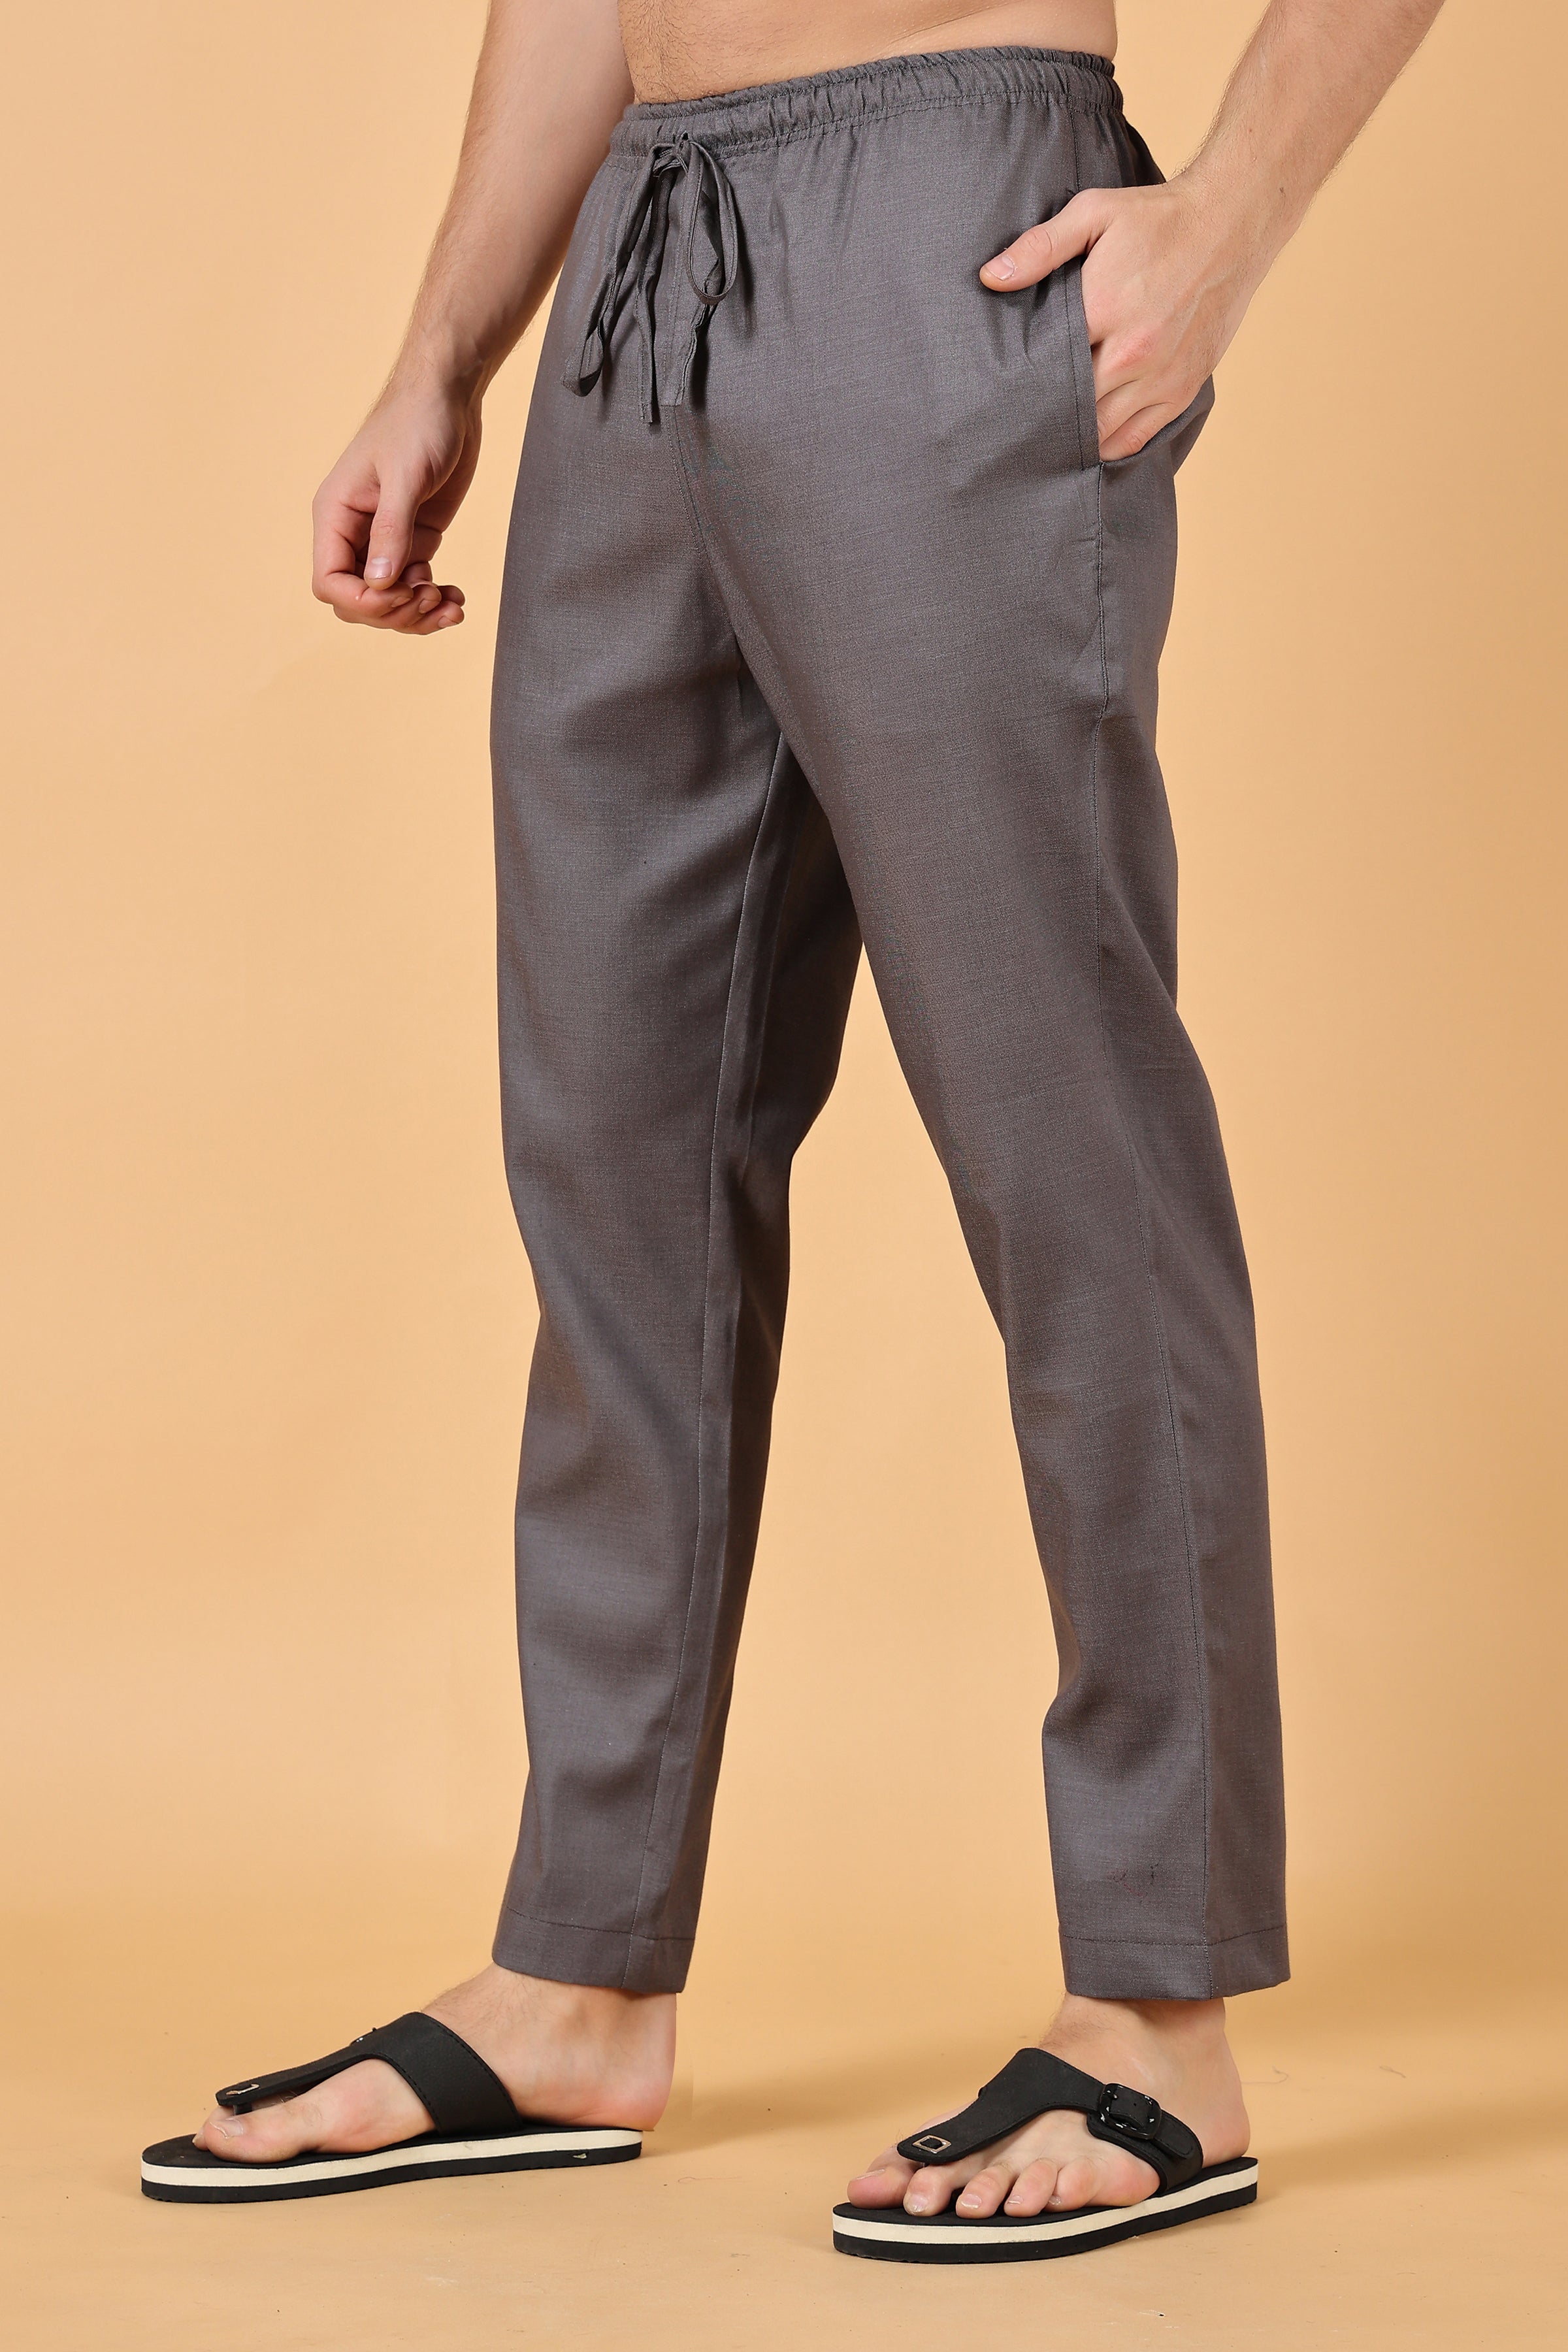 Hugo Boss Mens Kaito1Travel Gray Tapered Slim Fit Casual Pants US 34R IT  50 at Amazon Mens Clothing store